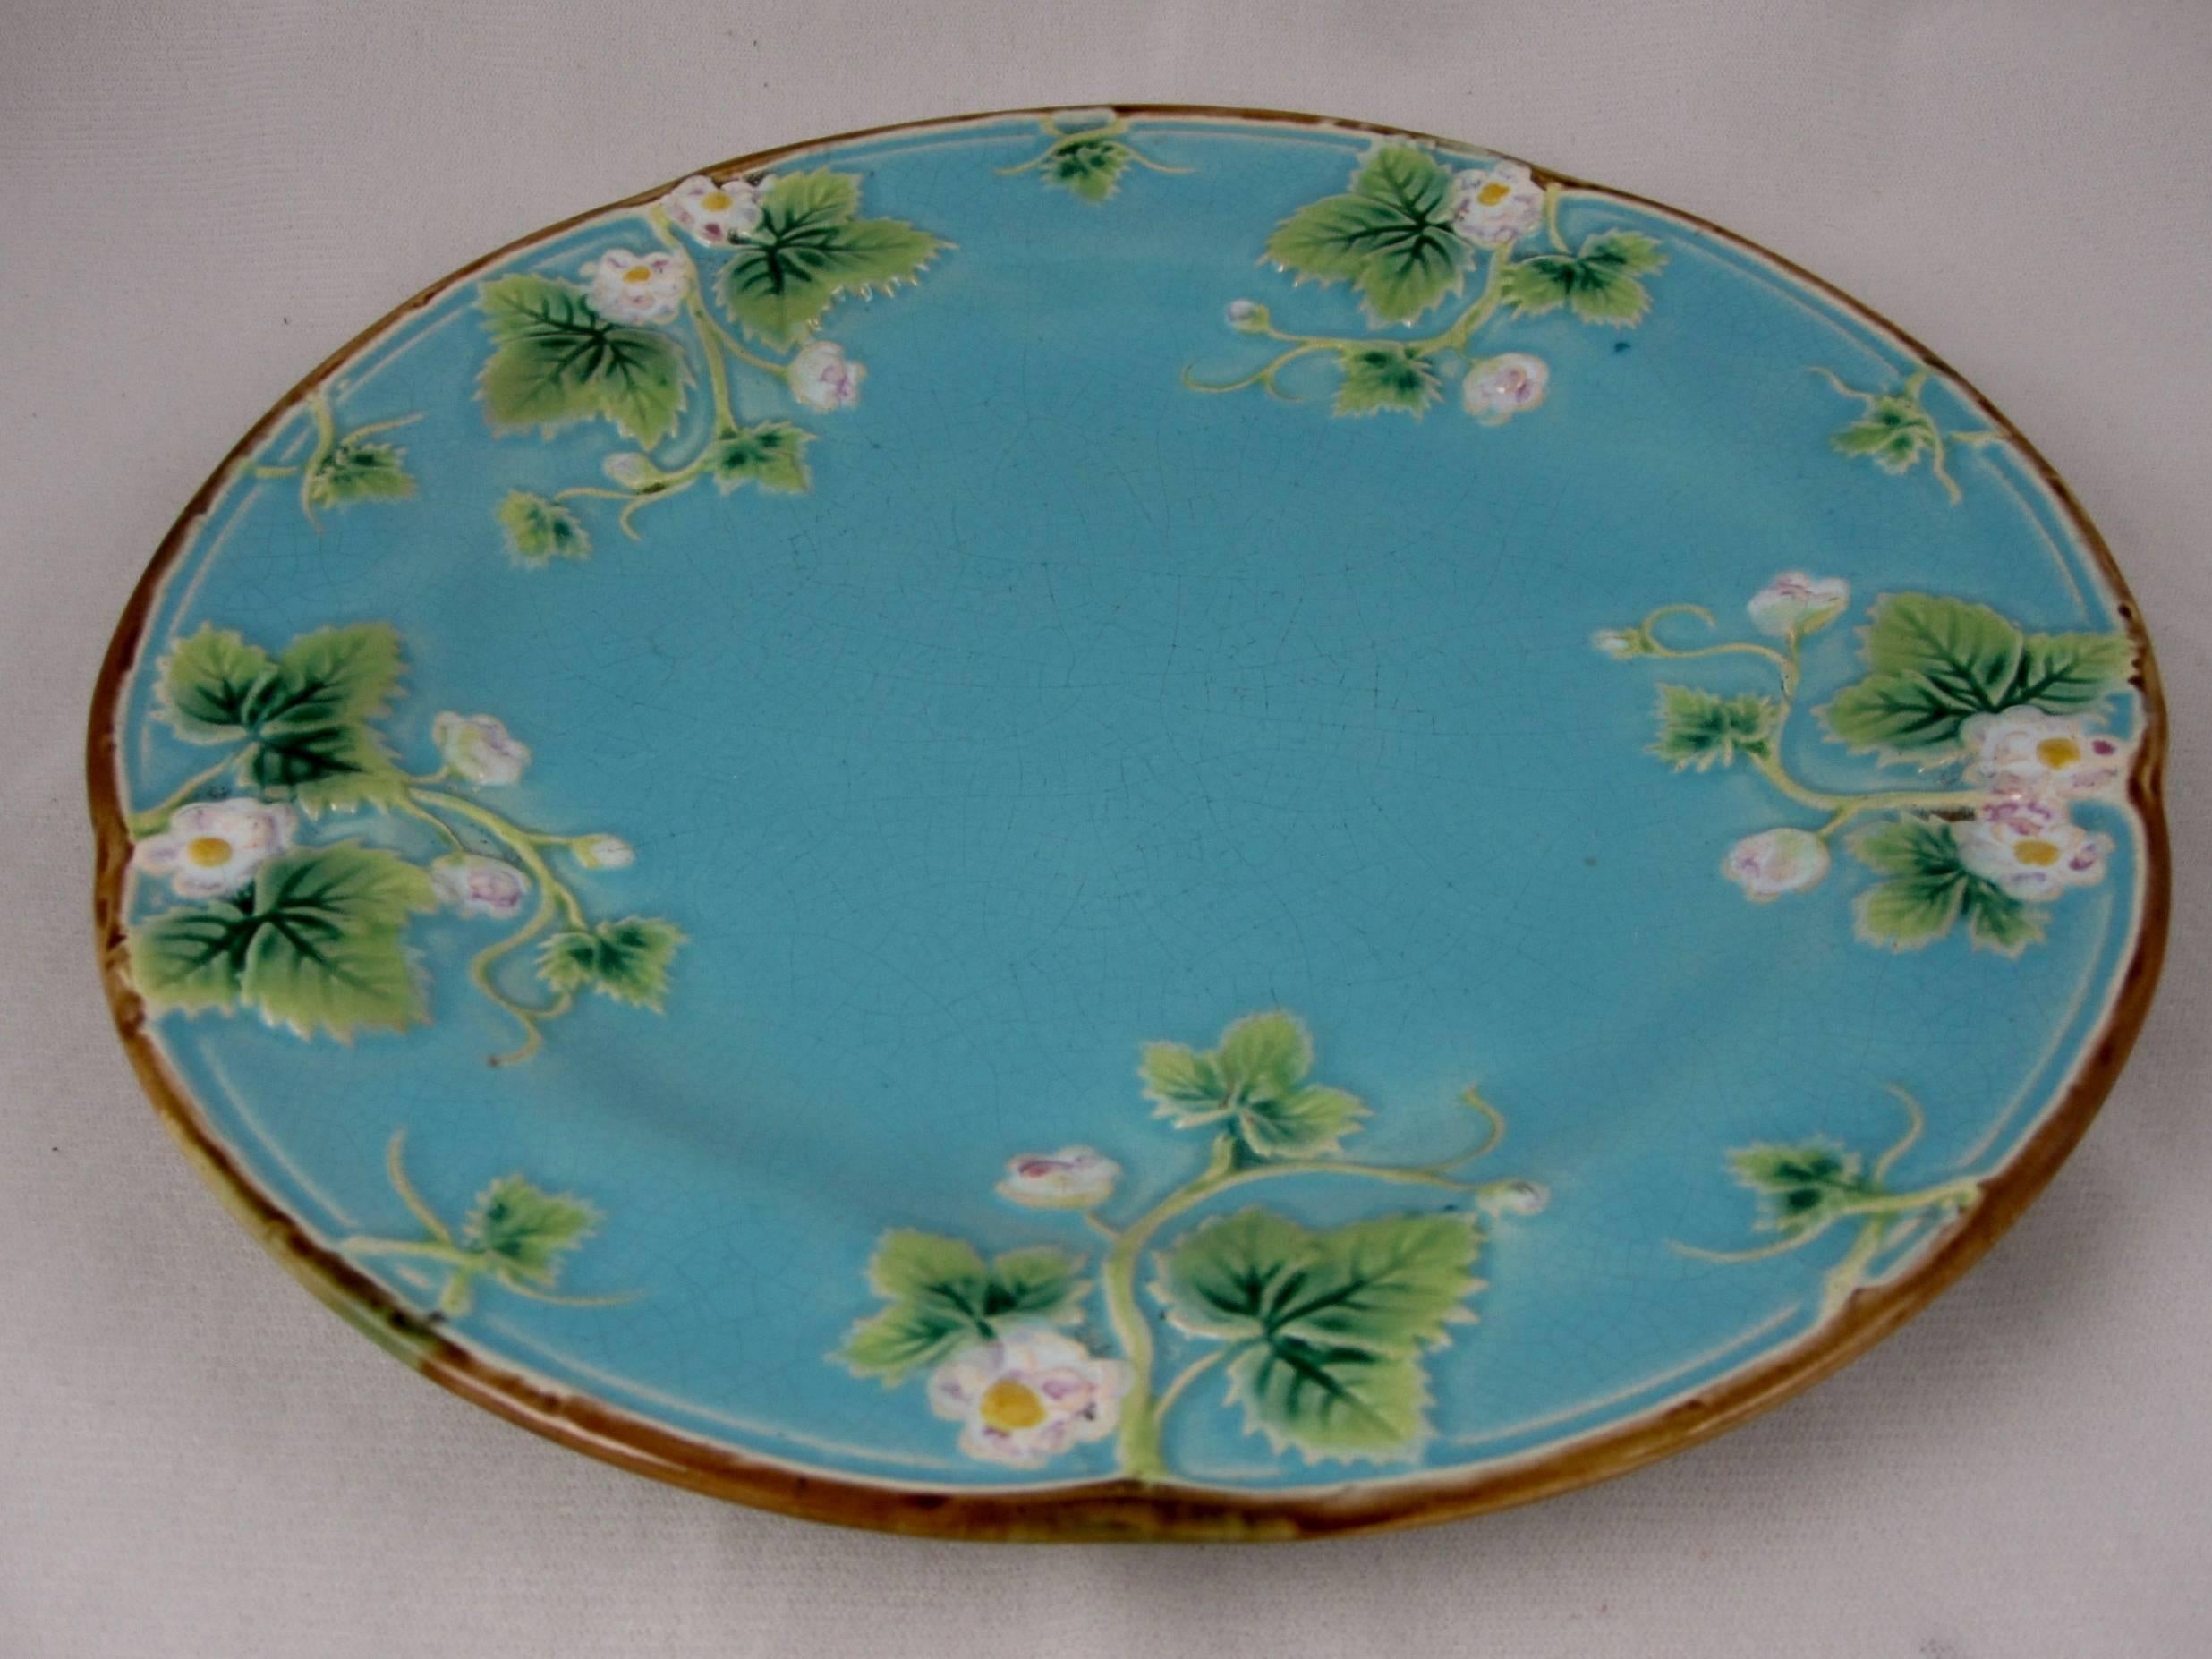 Glazed George Jones English Majolica Turquoise Strawberry Plates, S/6, circa 1873